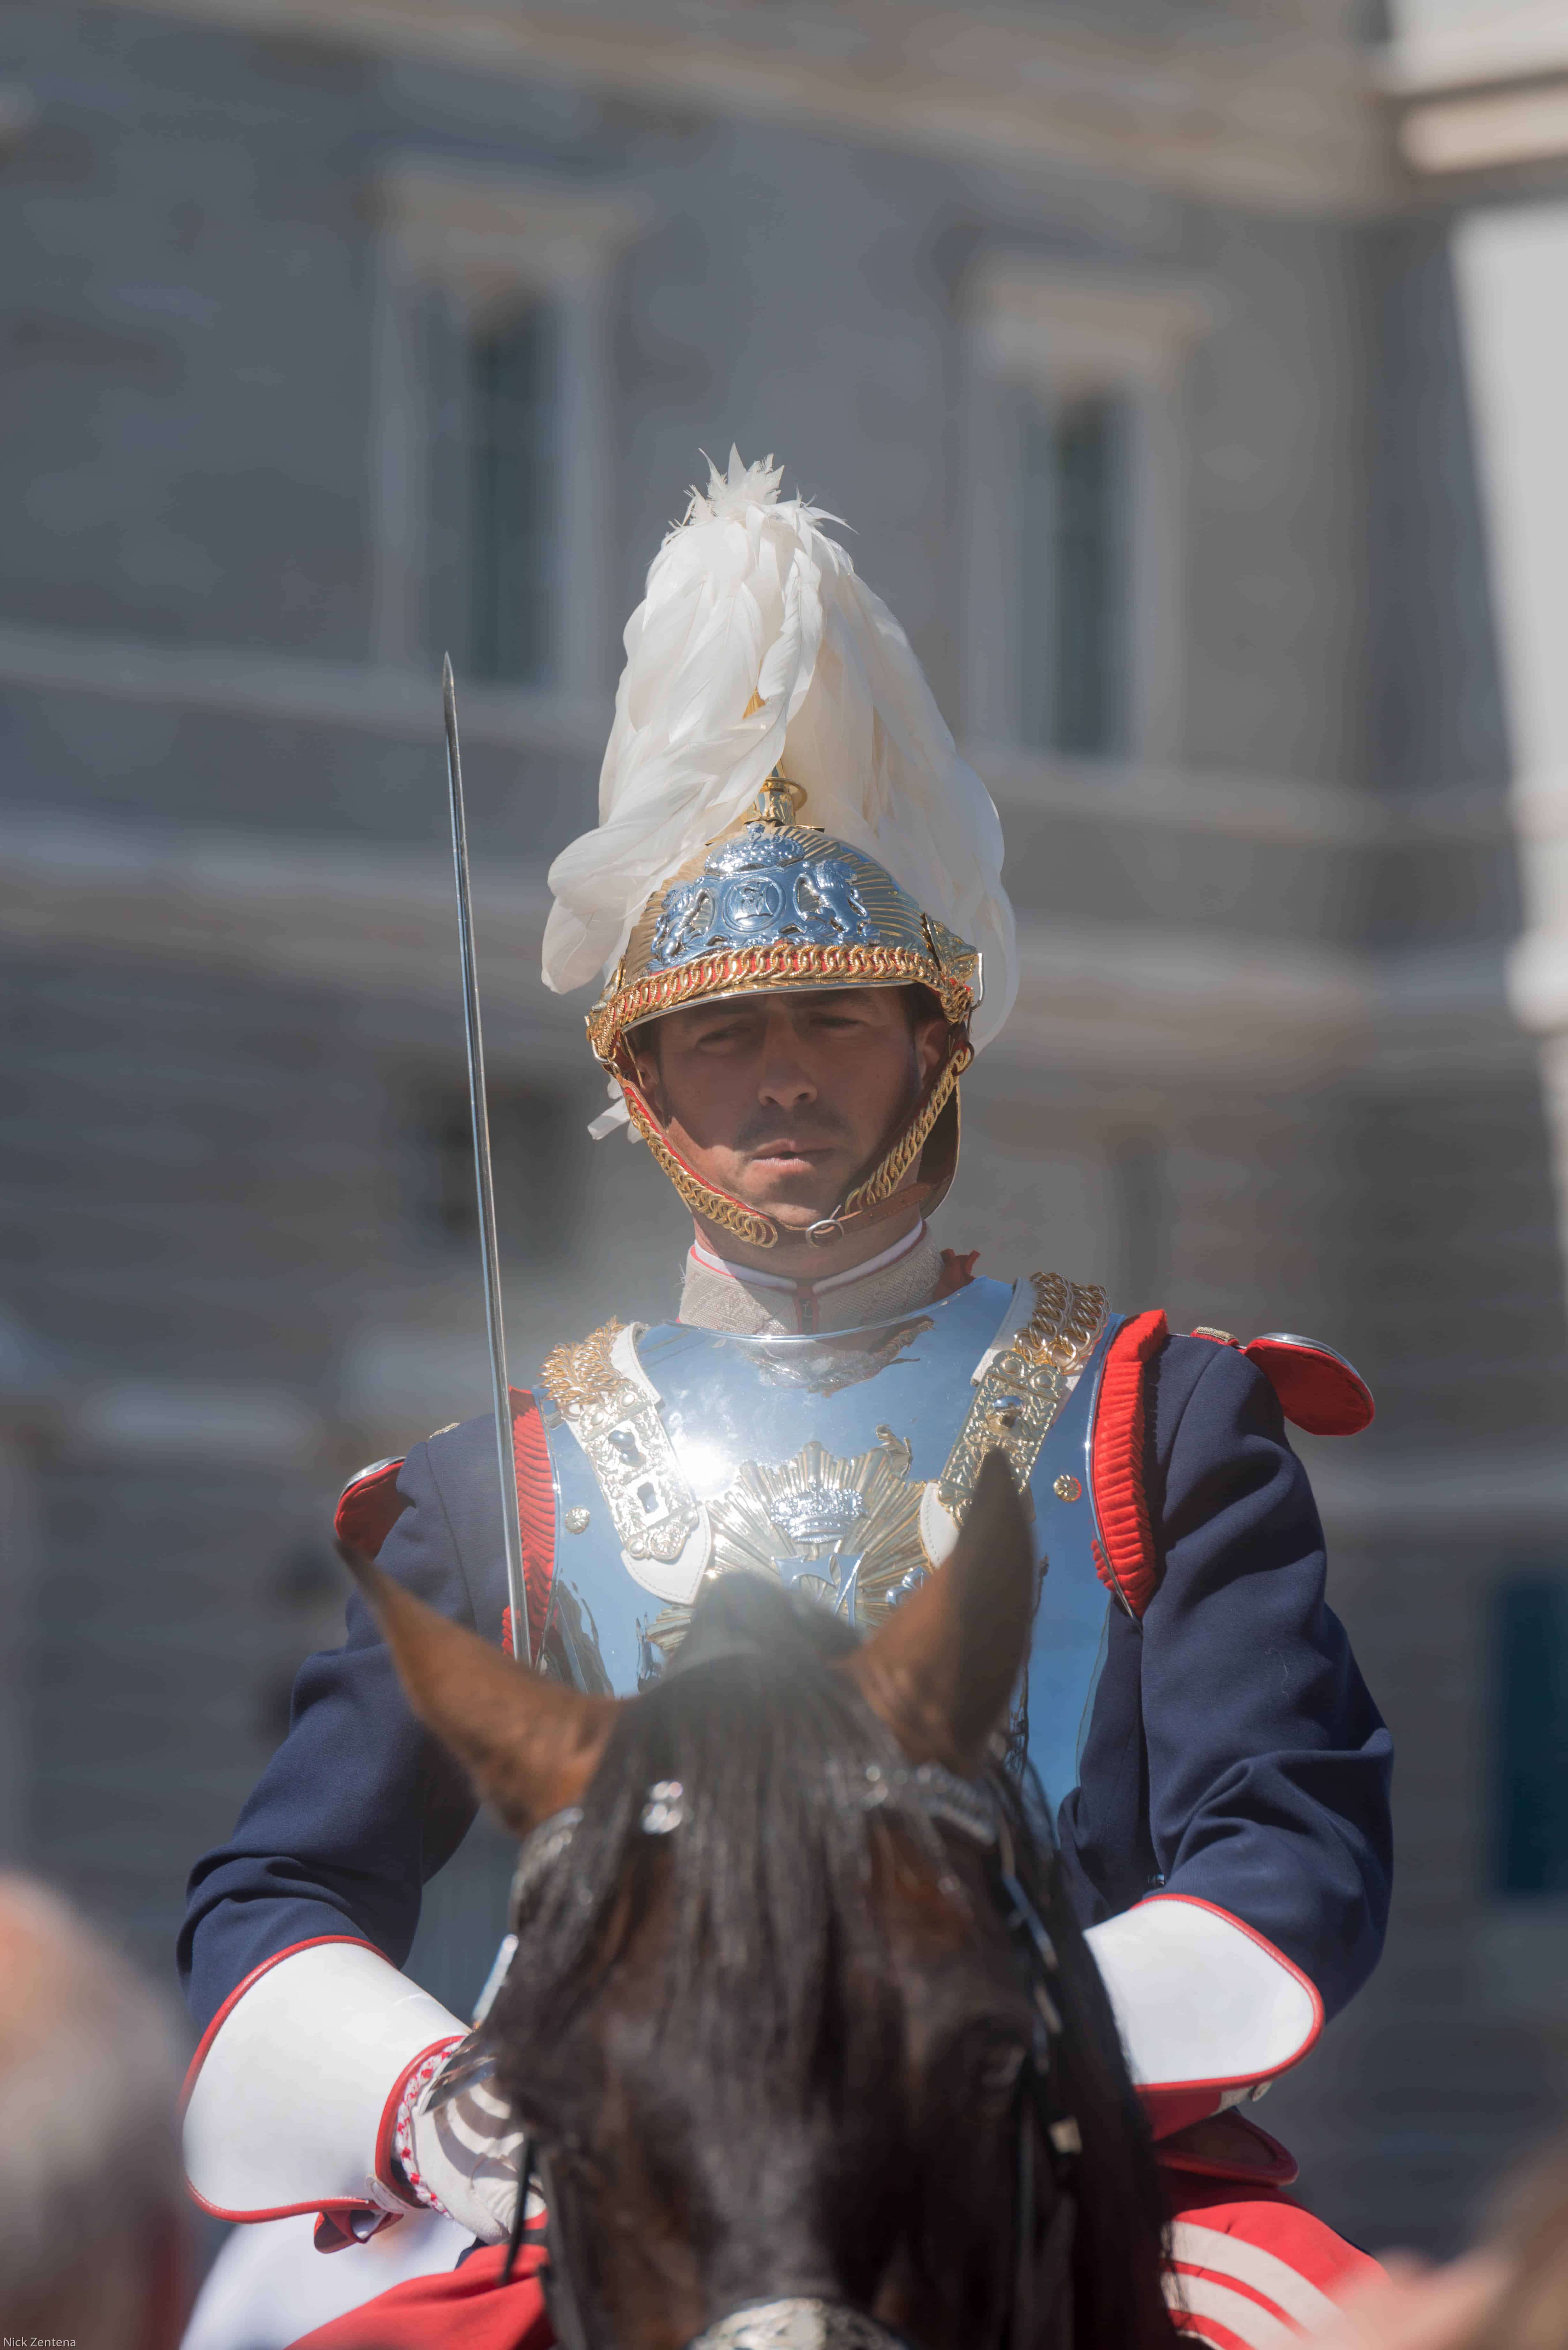 Spanish Royal guard on horseback